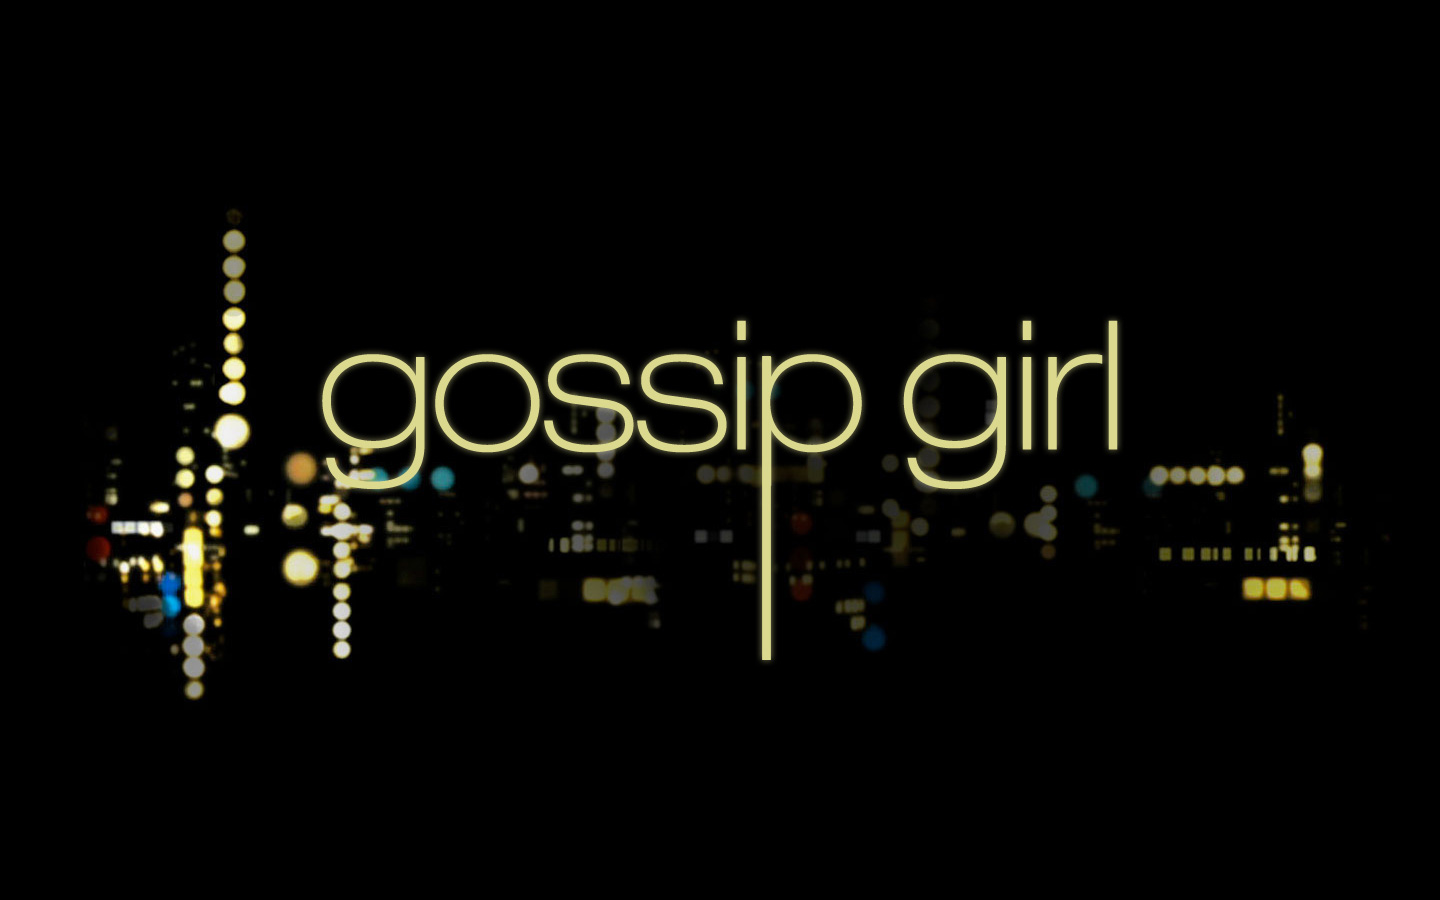 Using Data on Gossip Girl